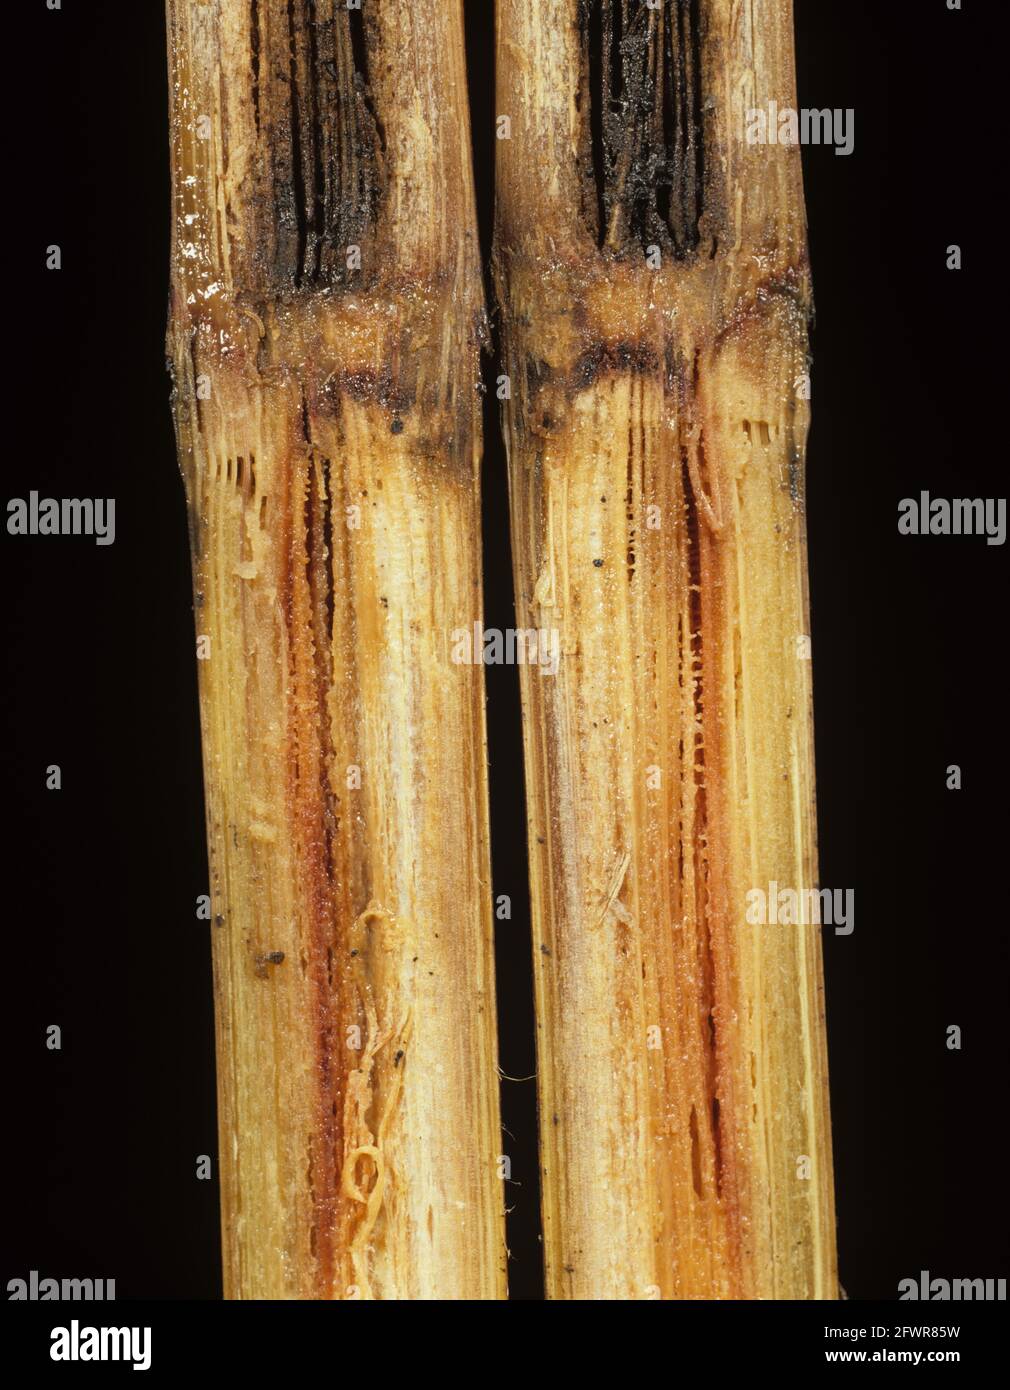 Pineapple disease or black rot (Ceratocystis paradoxa) symptoms in a longitudinal section of sugarcane stem Stock Photo